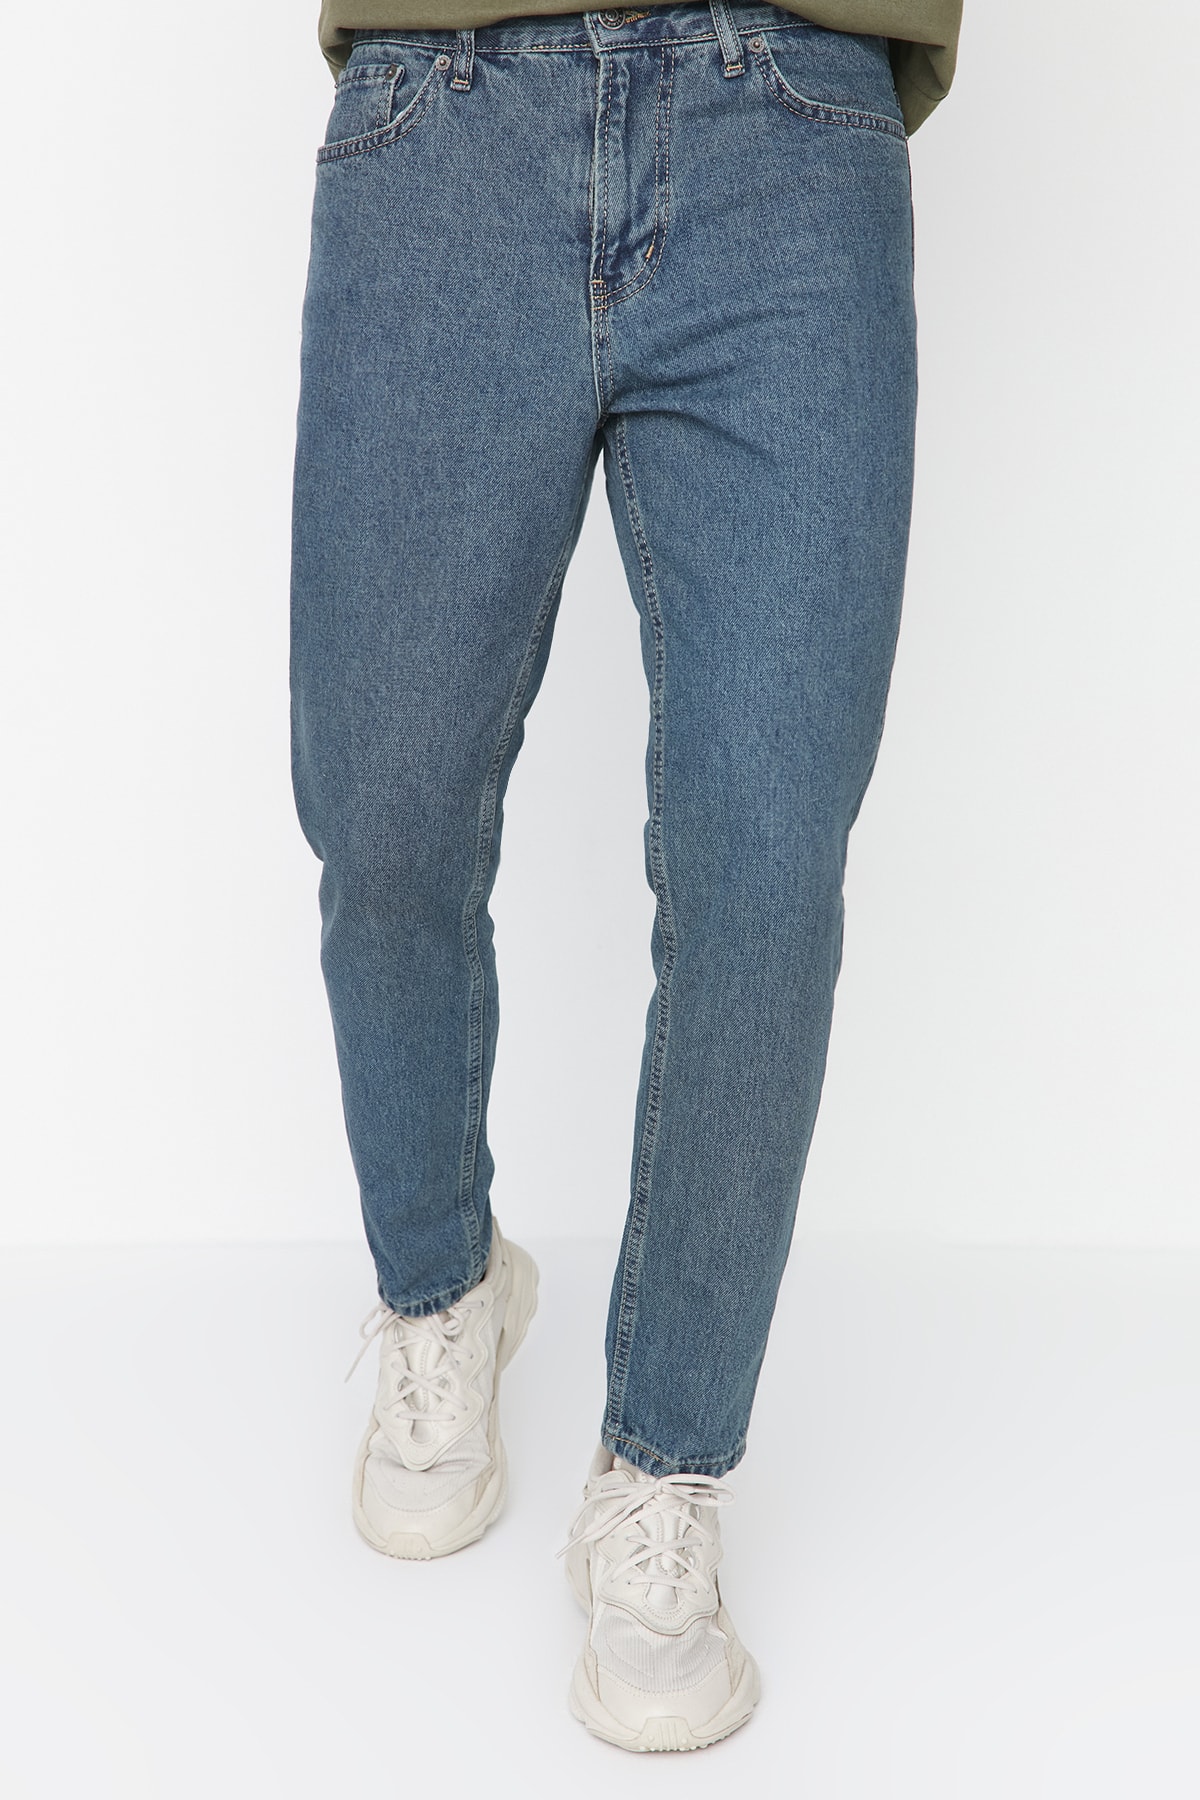 Trendyol Men's Navy Blue Green Tint Relax Fit Jeans Denim Trousers